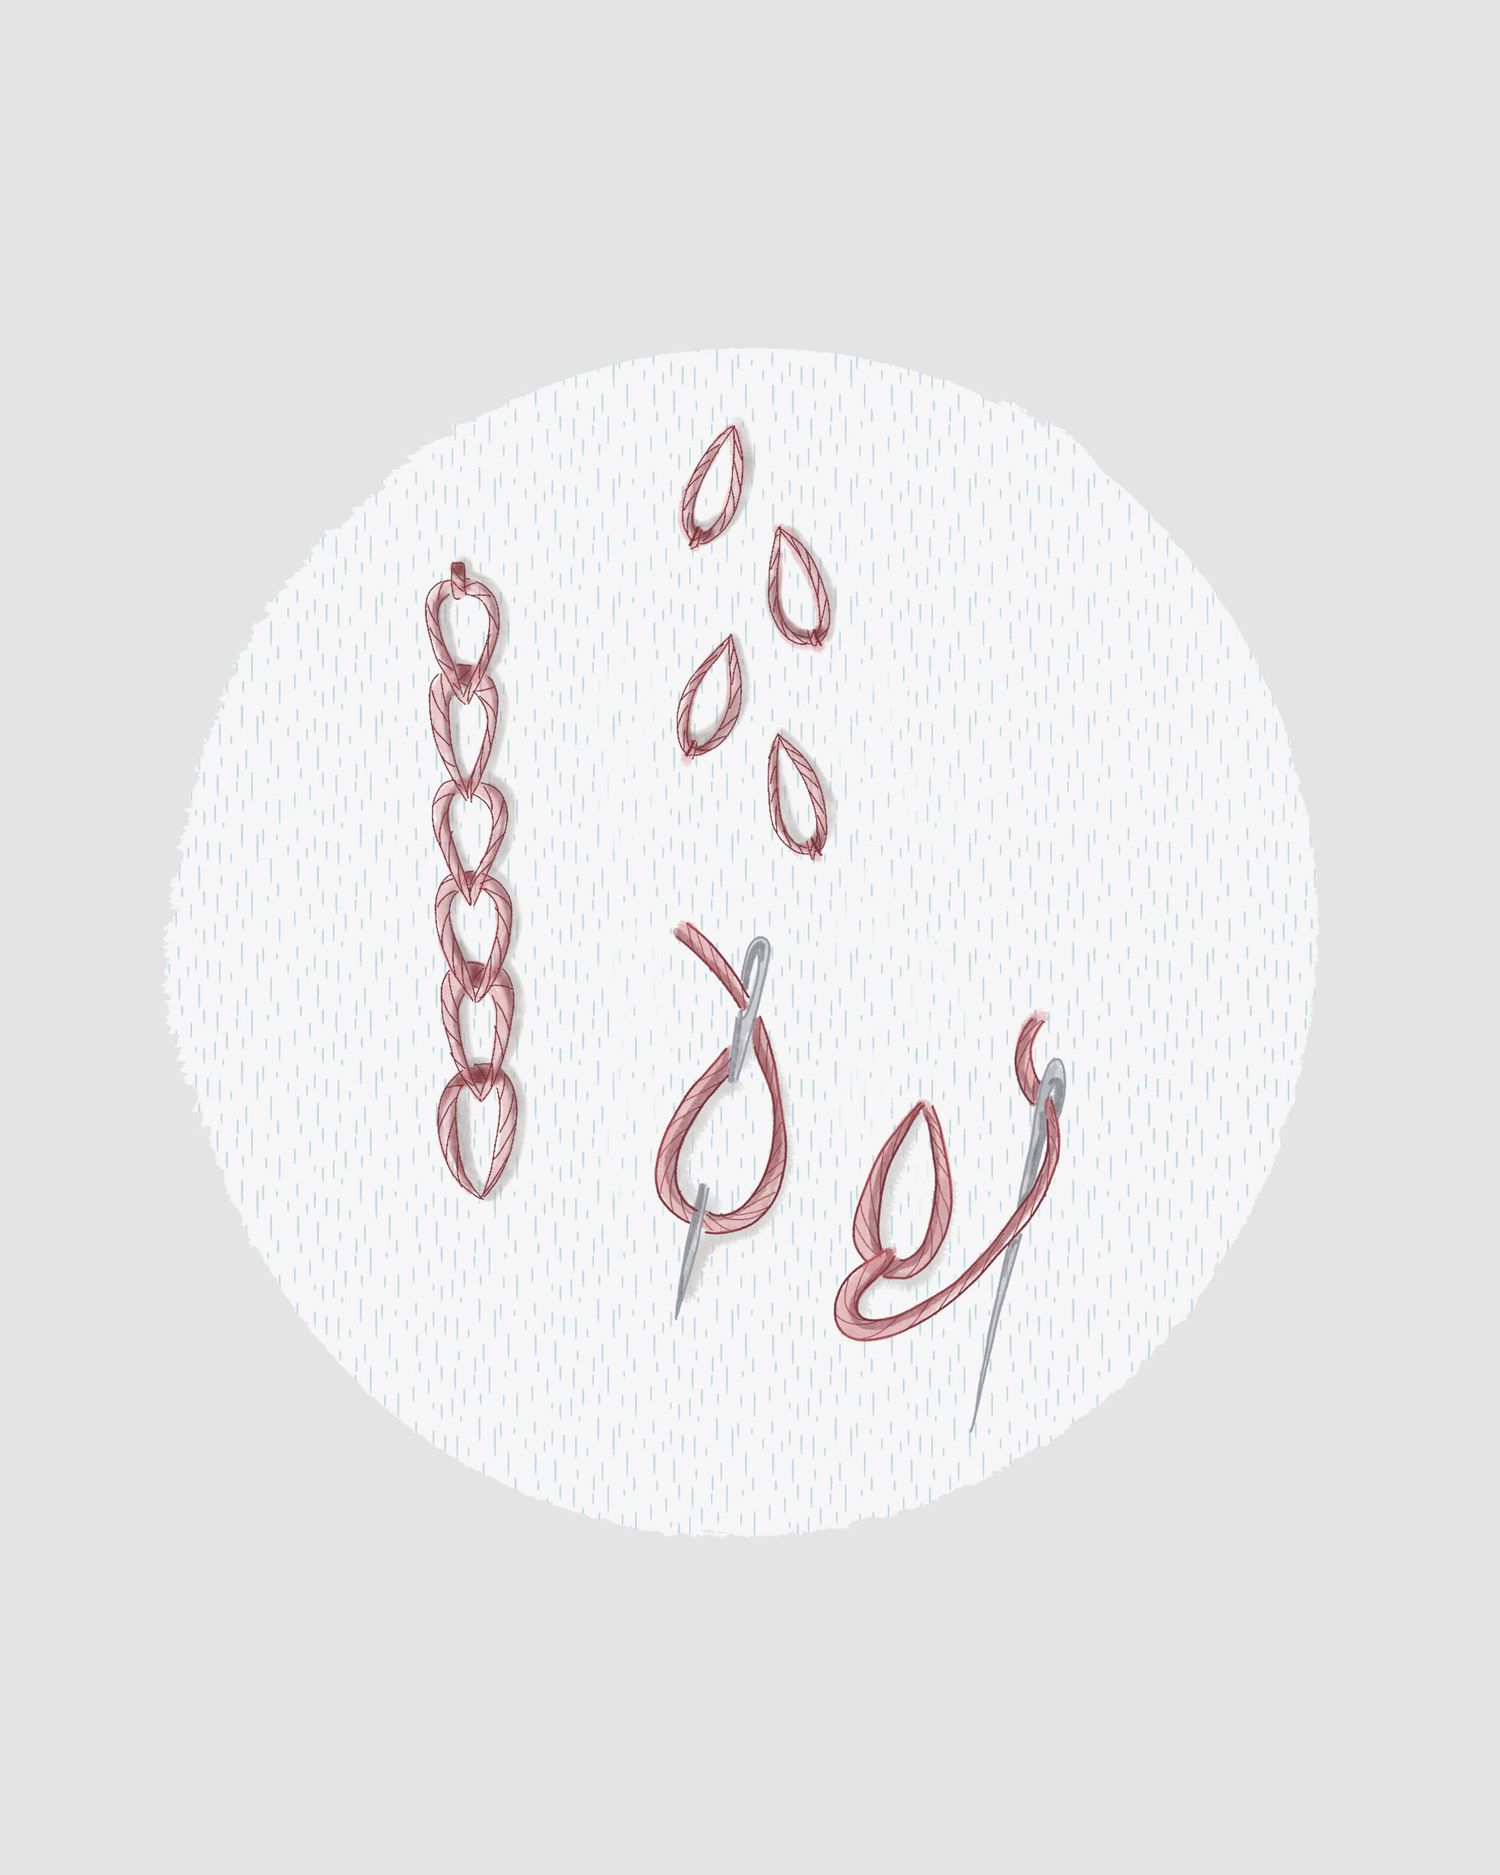 chain stitch in embroidery